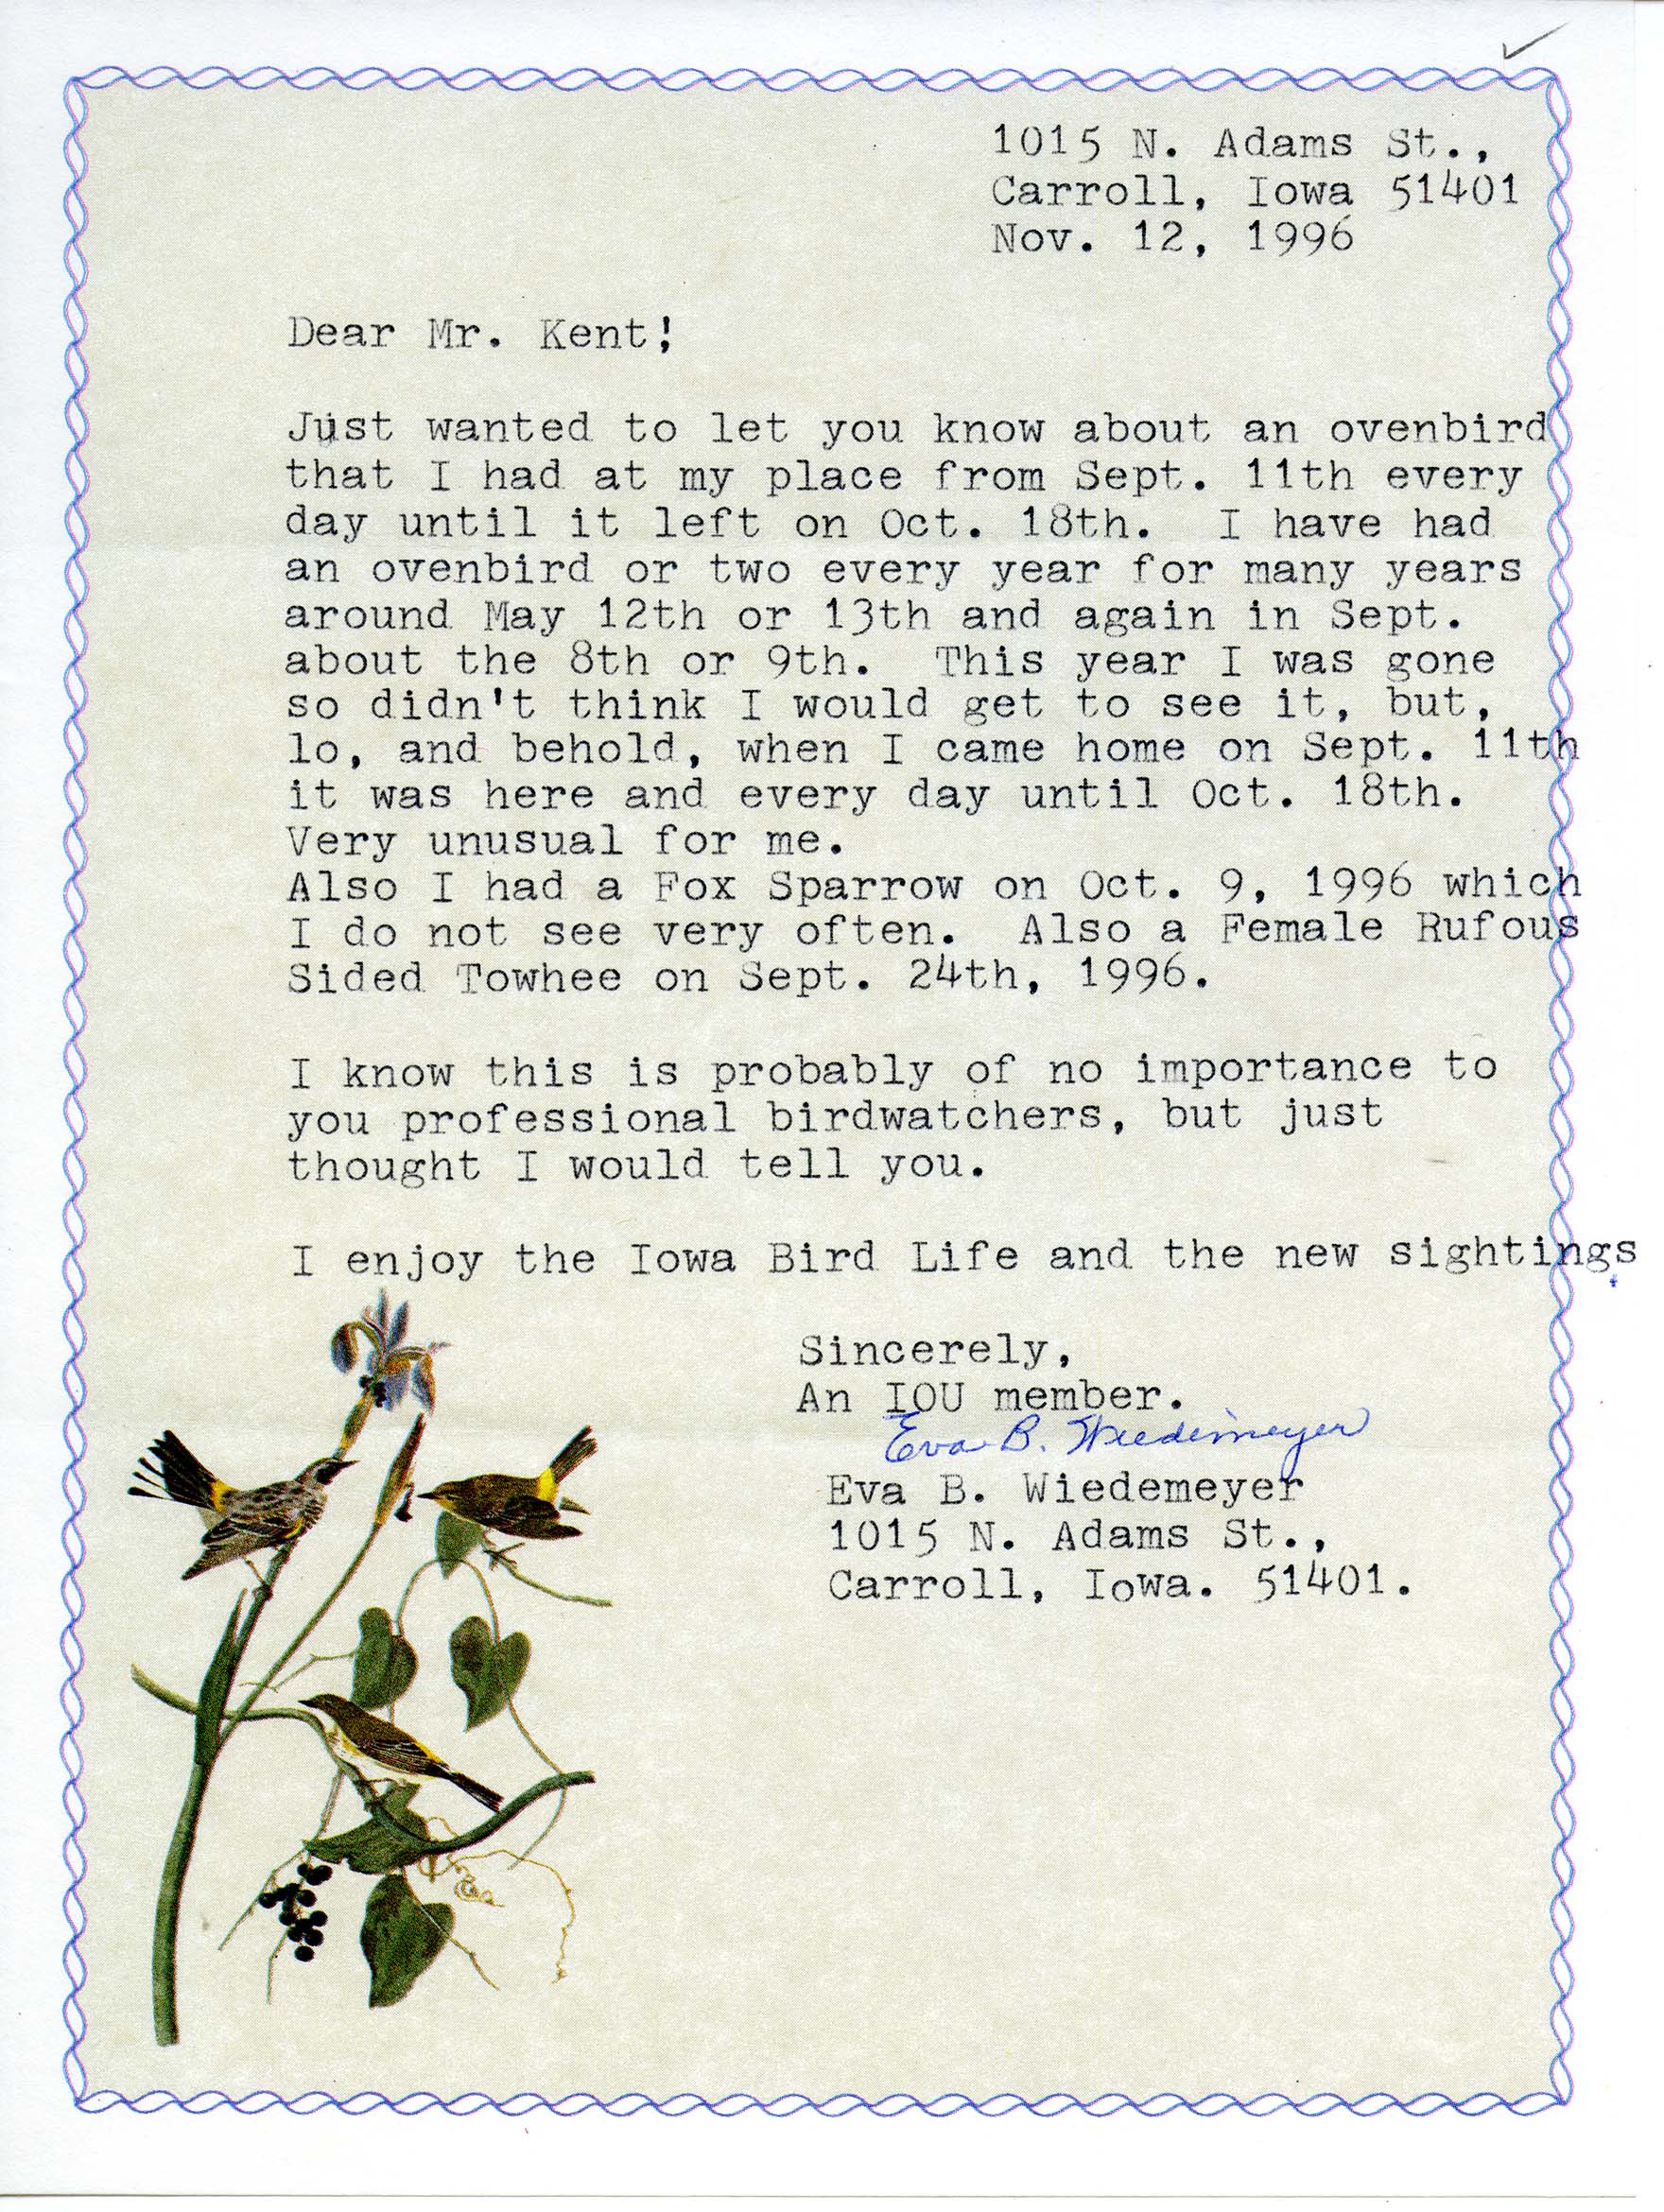 Eva B. Wiedemeyer letter to Thomas H. Kent regarding an Ovenbird sighting, November 12, 1996